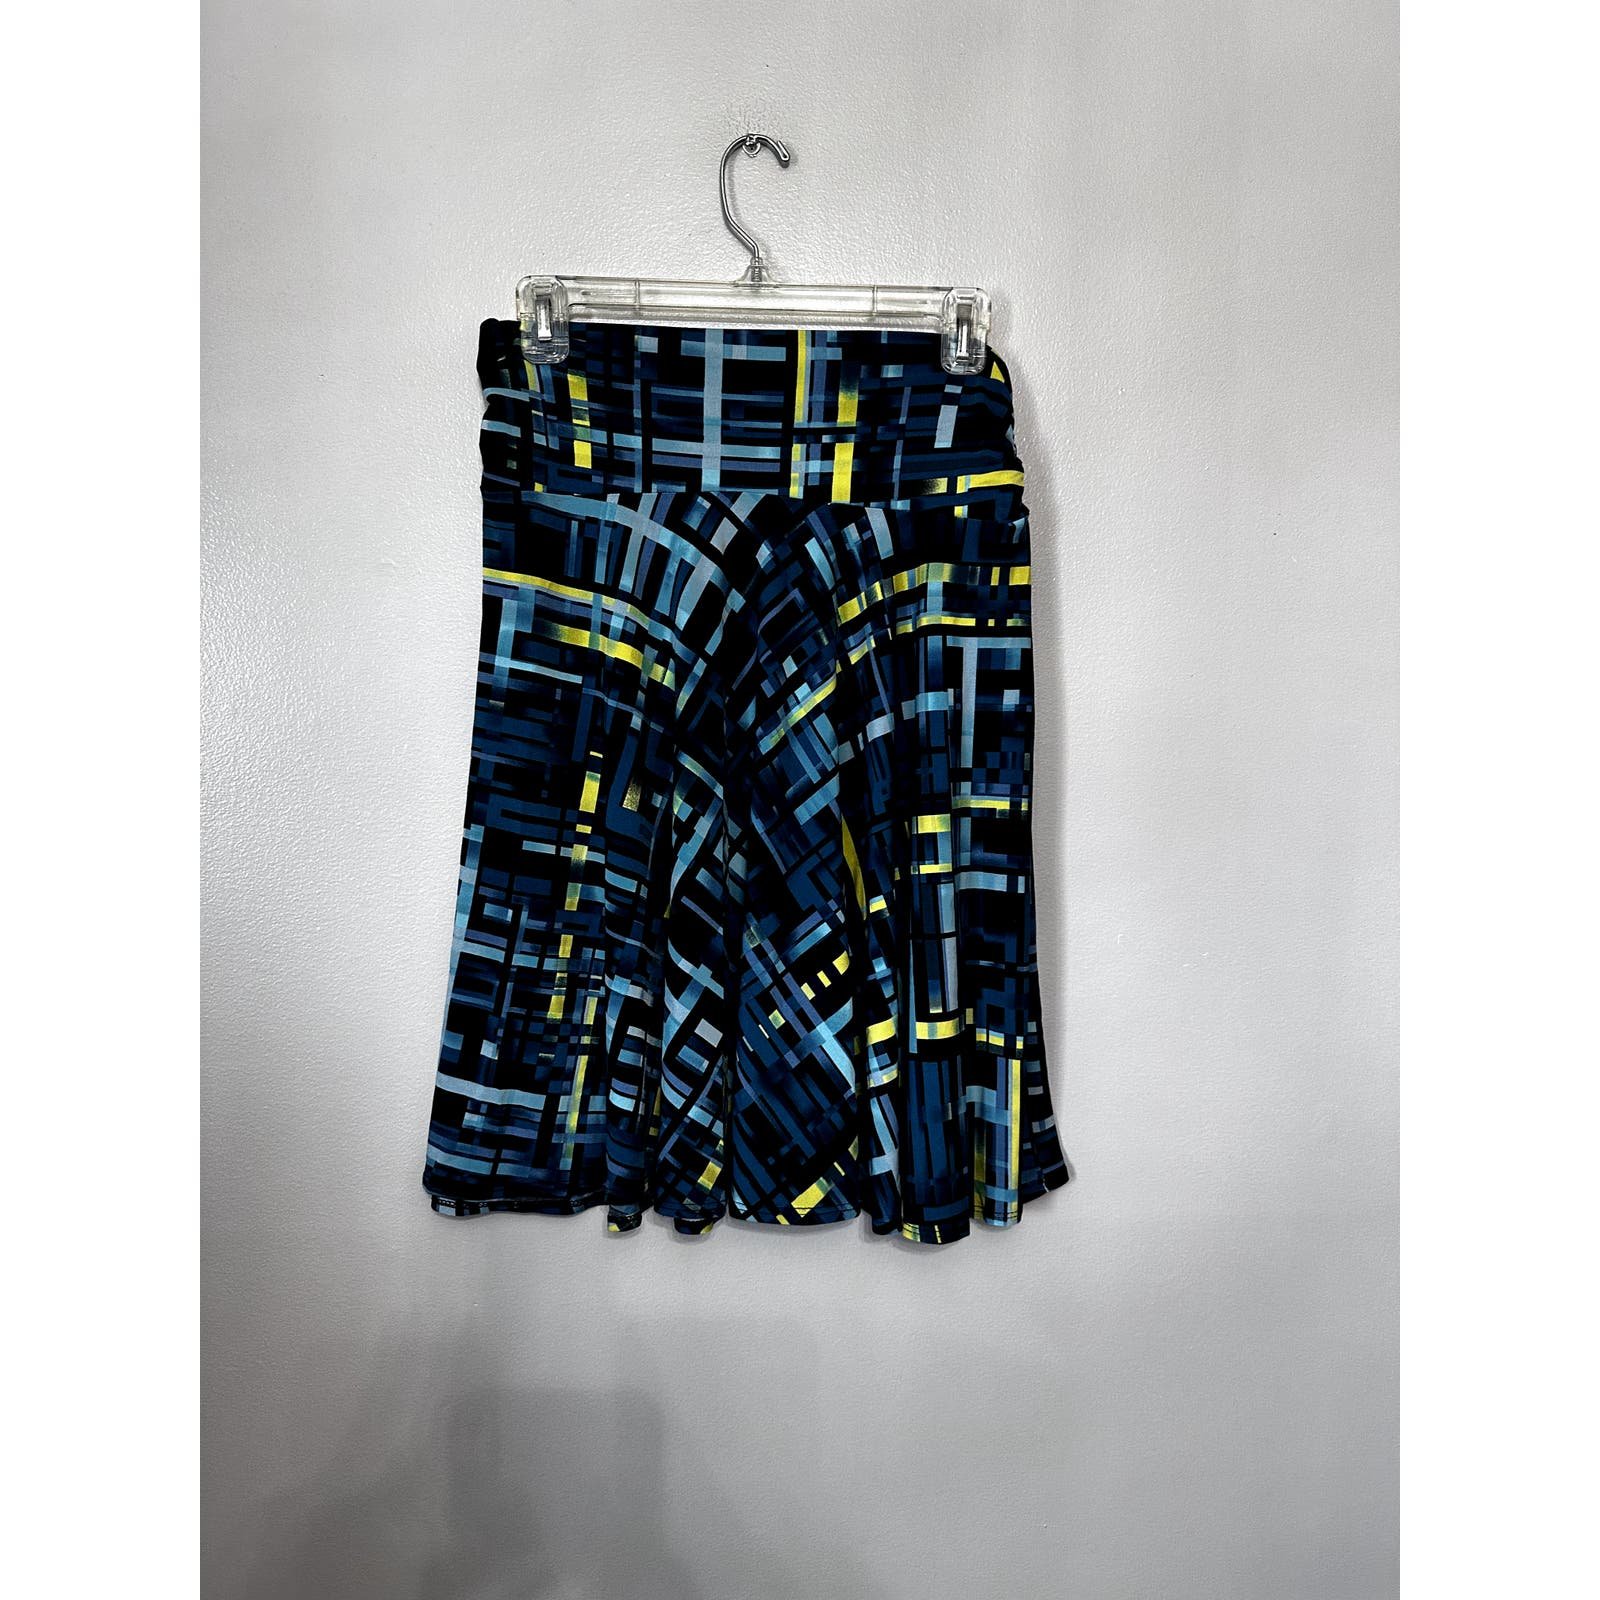 The Best Seller George Multi Colored Knee Length Skirt Pull On Elastic Waist M 8/10 KXlBwOuaS for sale